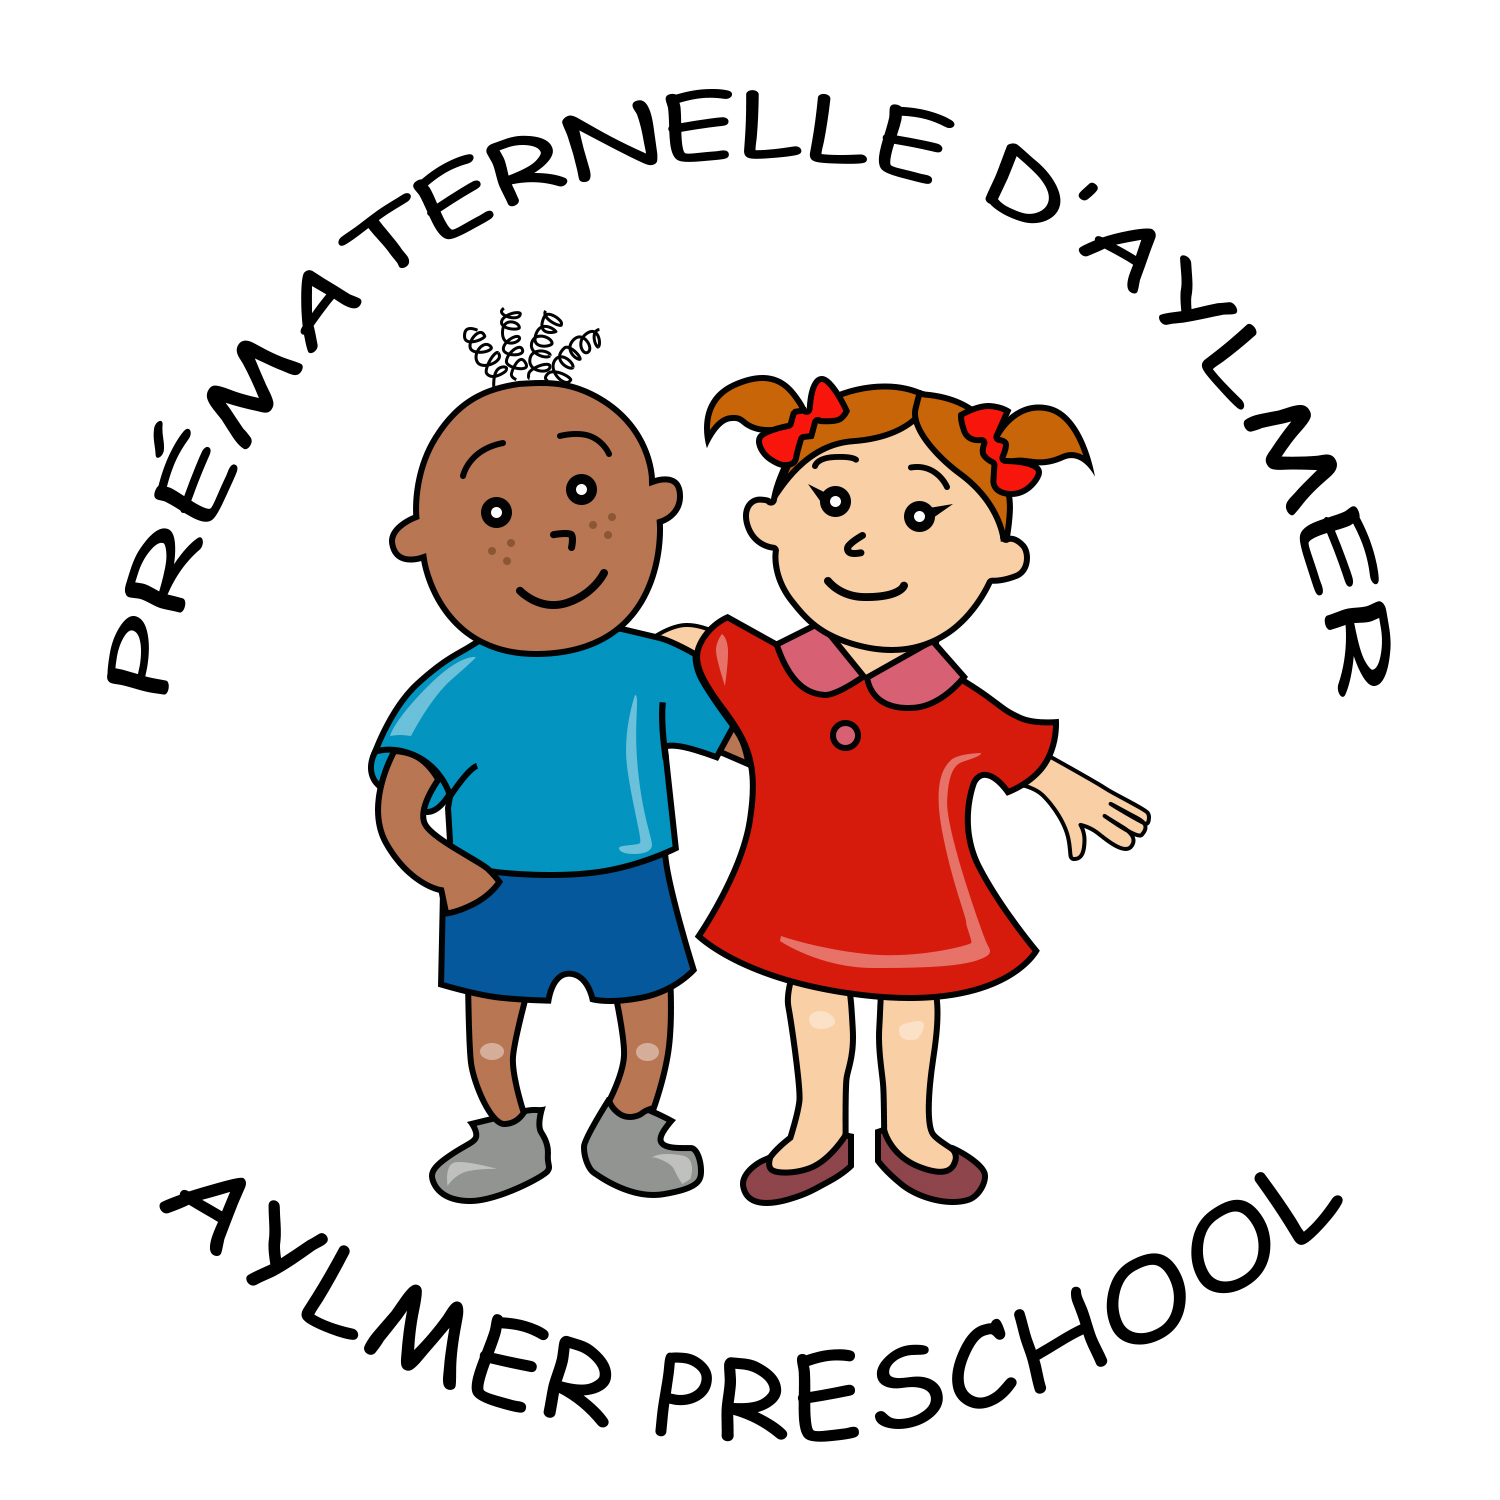 Aylmer preschool